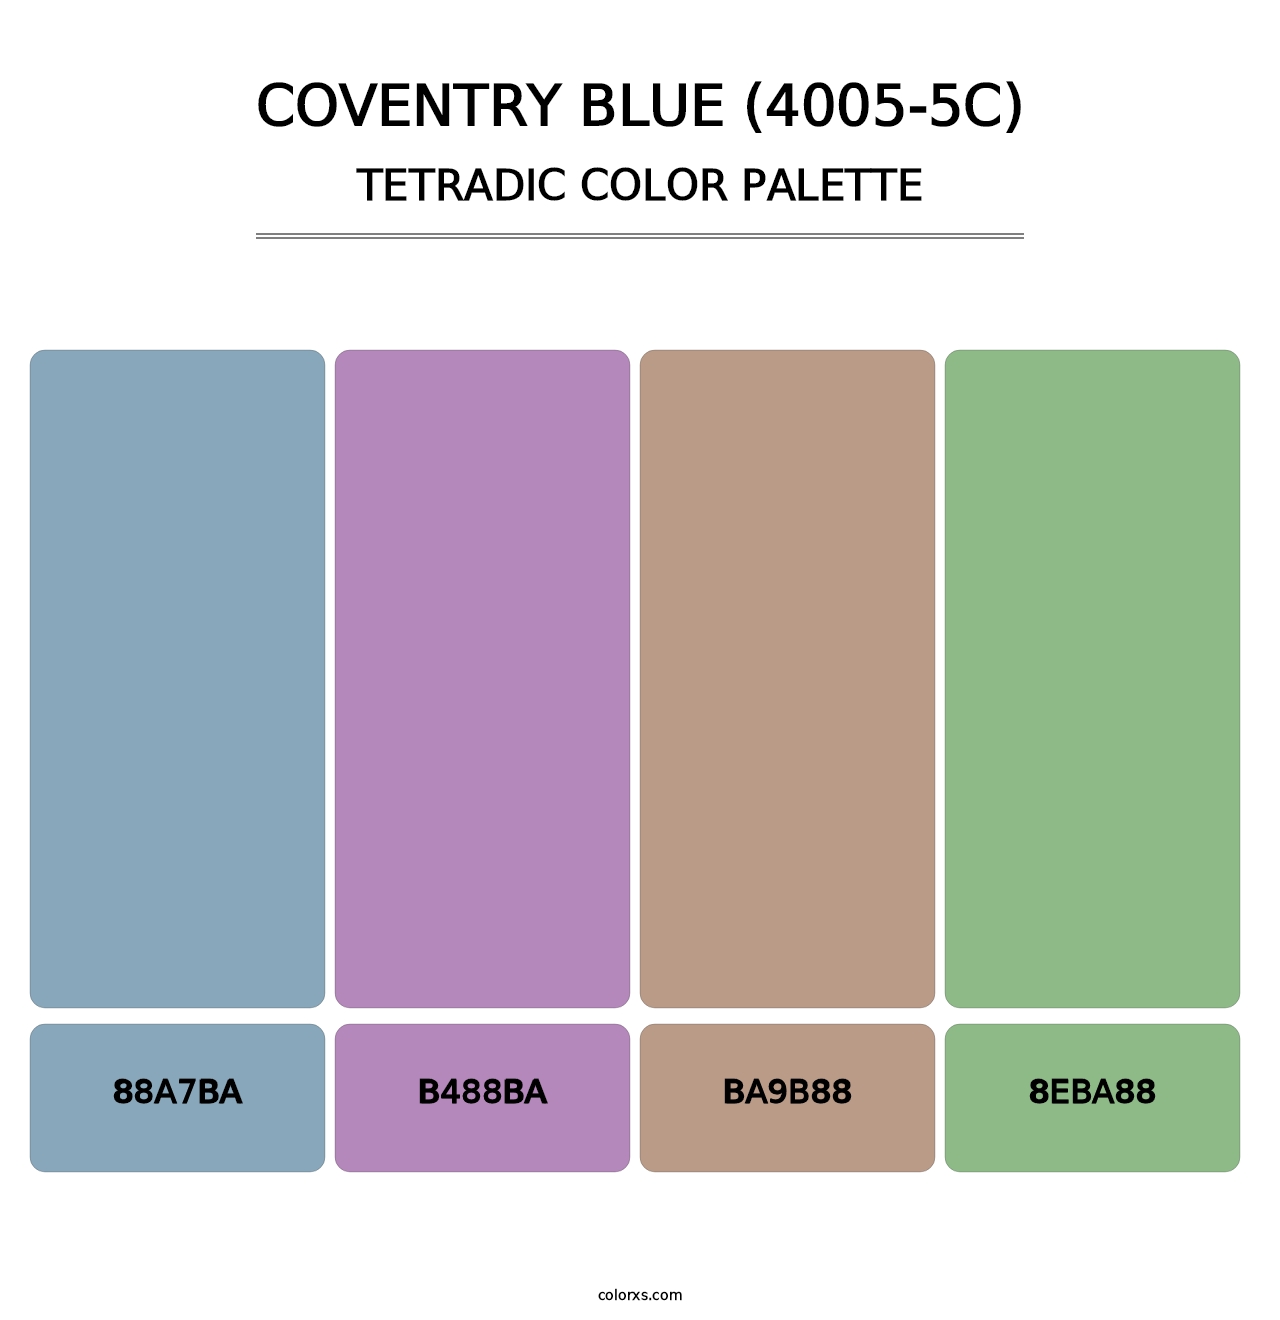 Coventry Blue (4005-5C) - Tetradic Color Palette